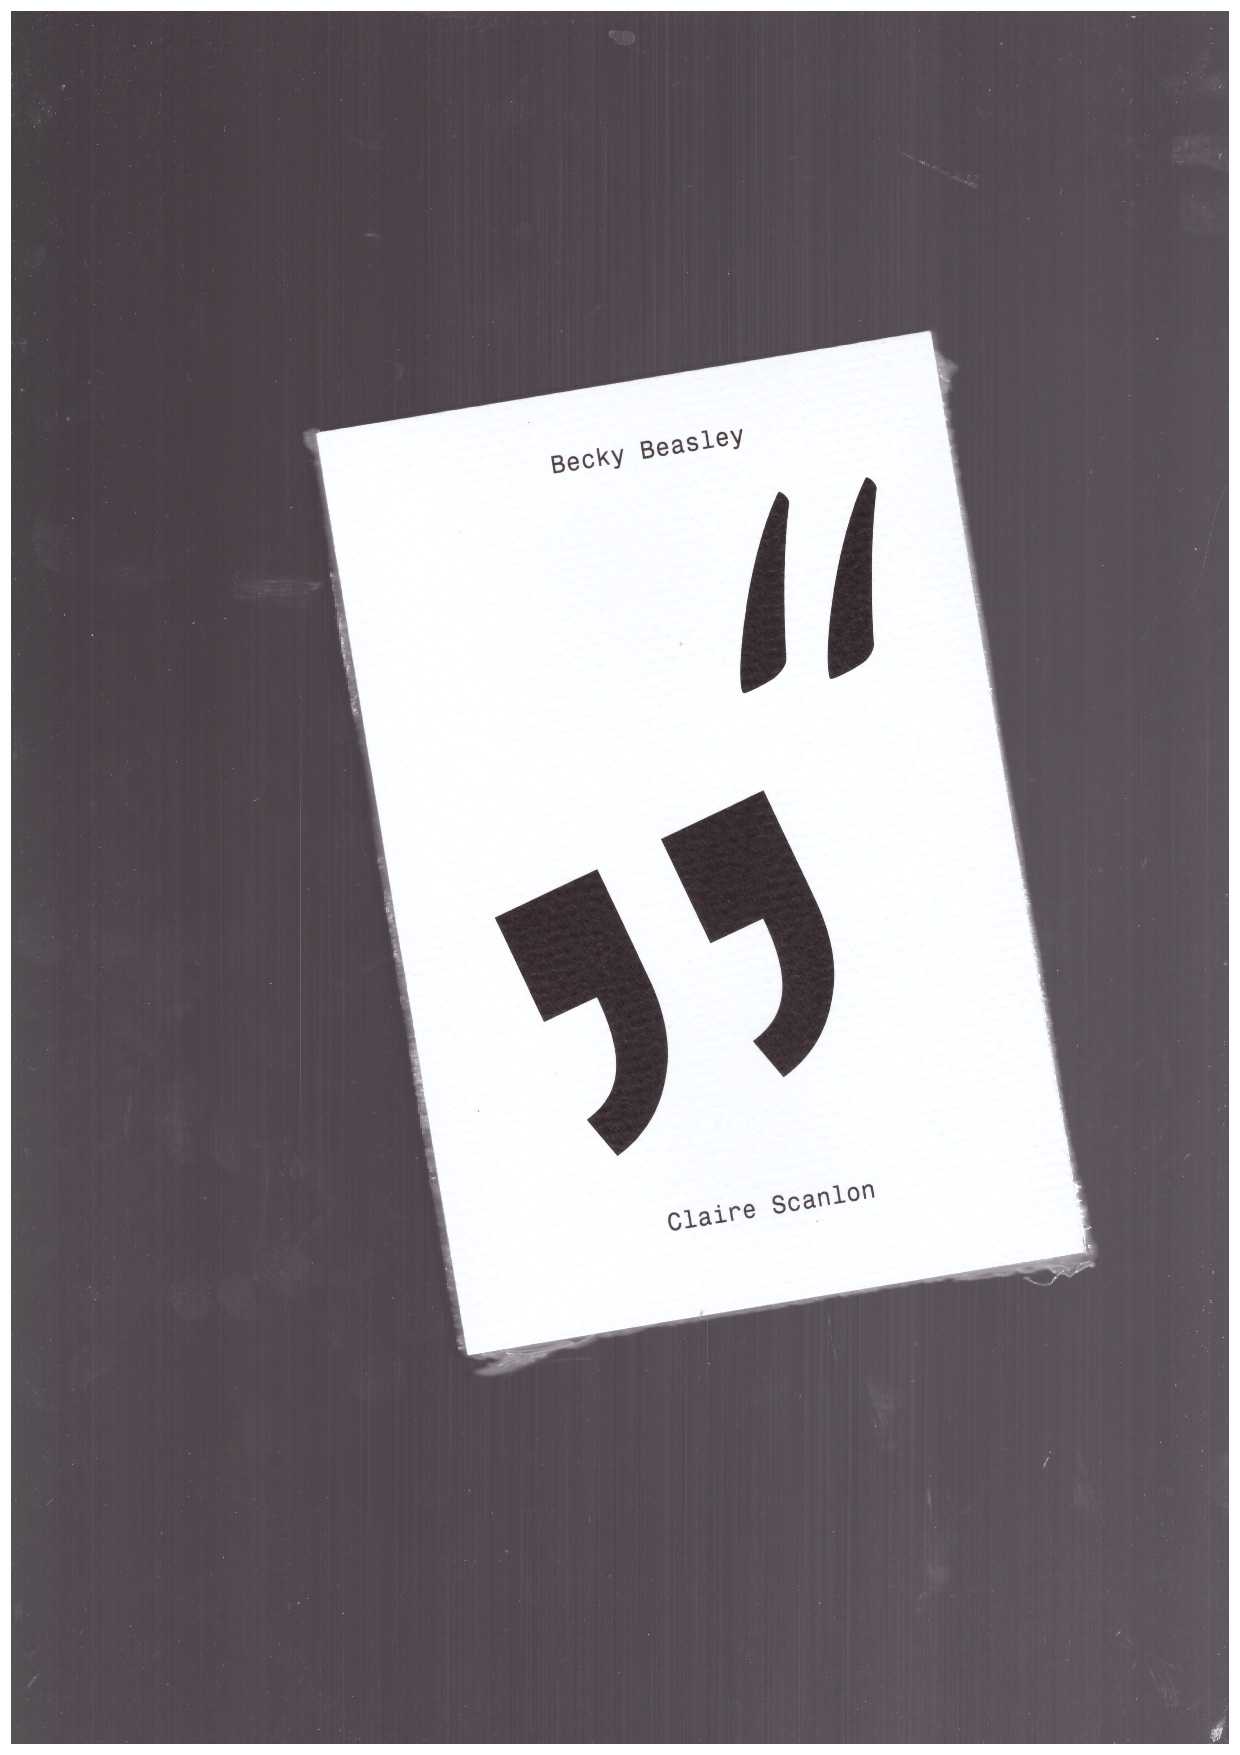 GIBBONS, Adam & WILSON, Eva (eds.) - Becky Beasley, Claire Scanlon “ ” n° 03